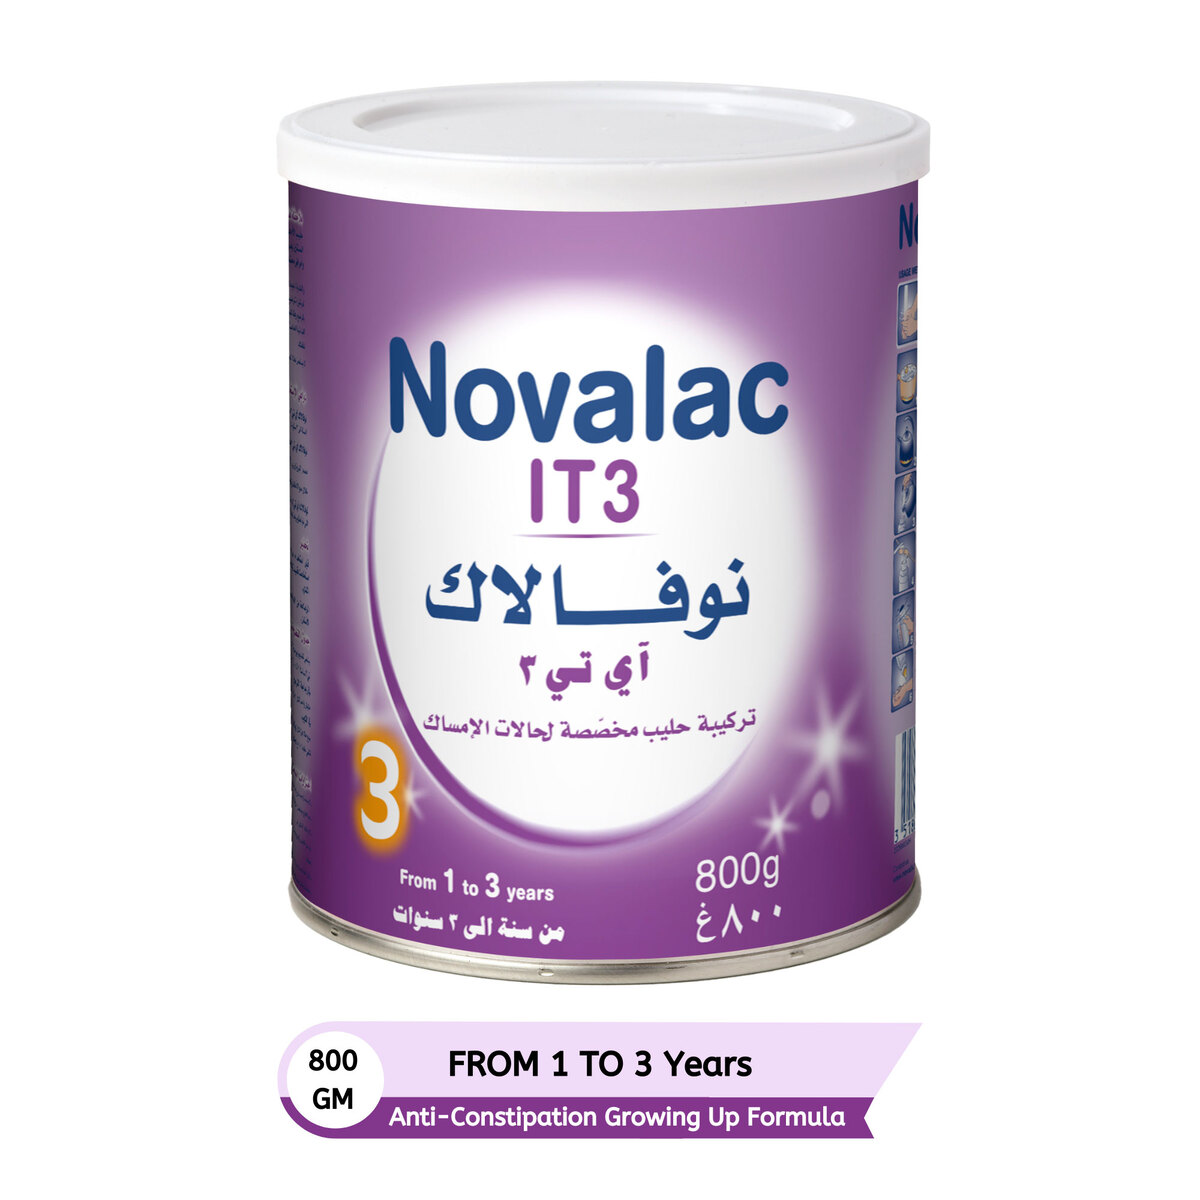 Buy Nestle NAN Supreme Pro 3 Milk Formula Powder 800 g Online at Best Price  in UAE